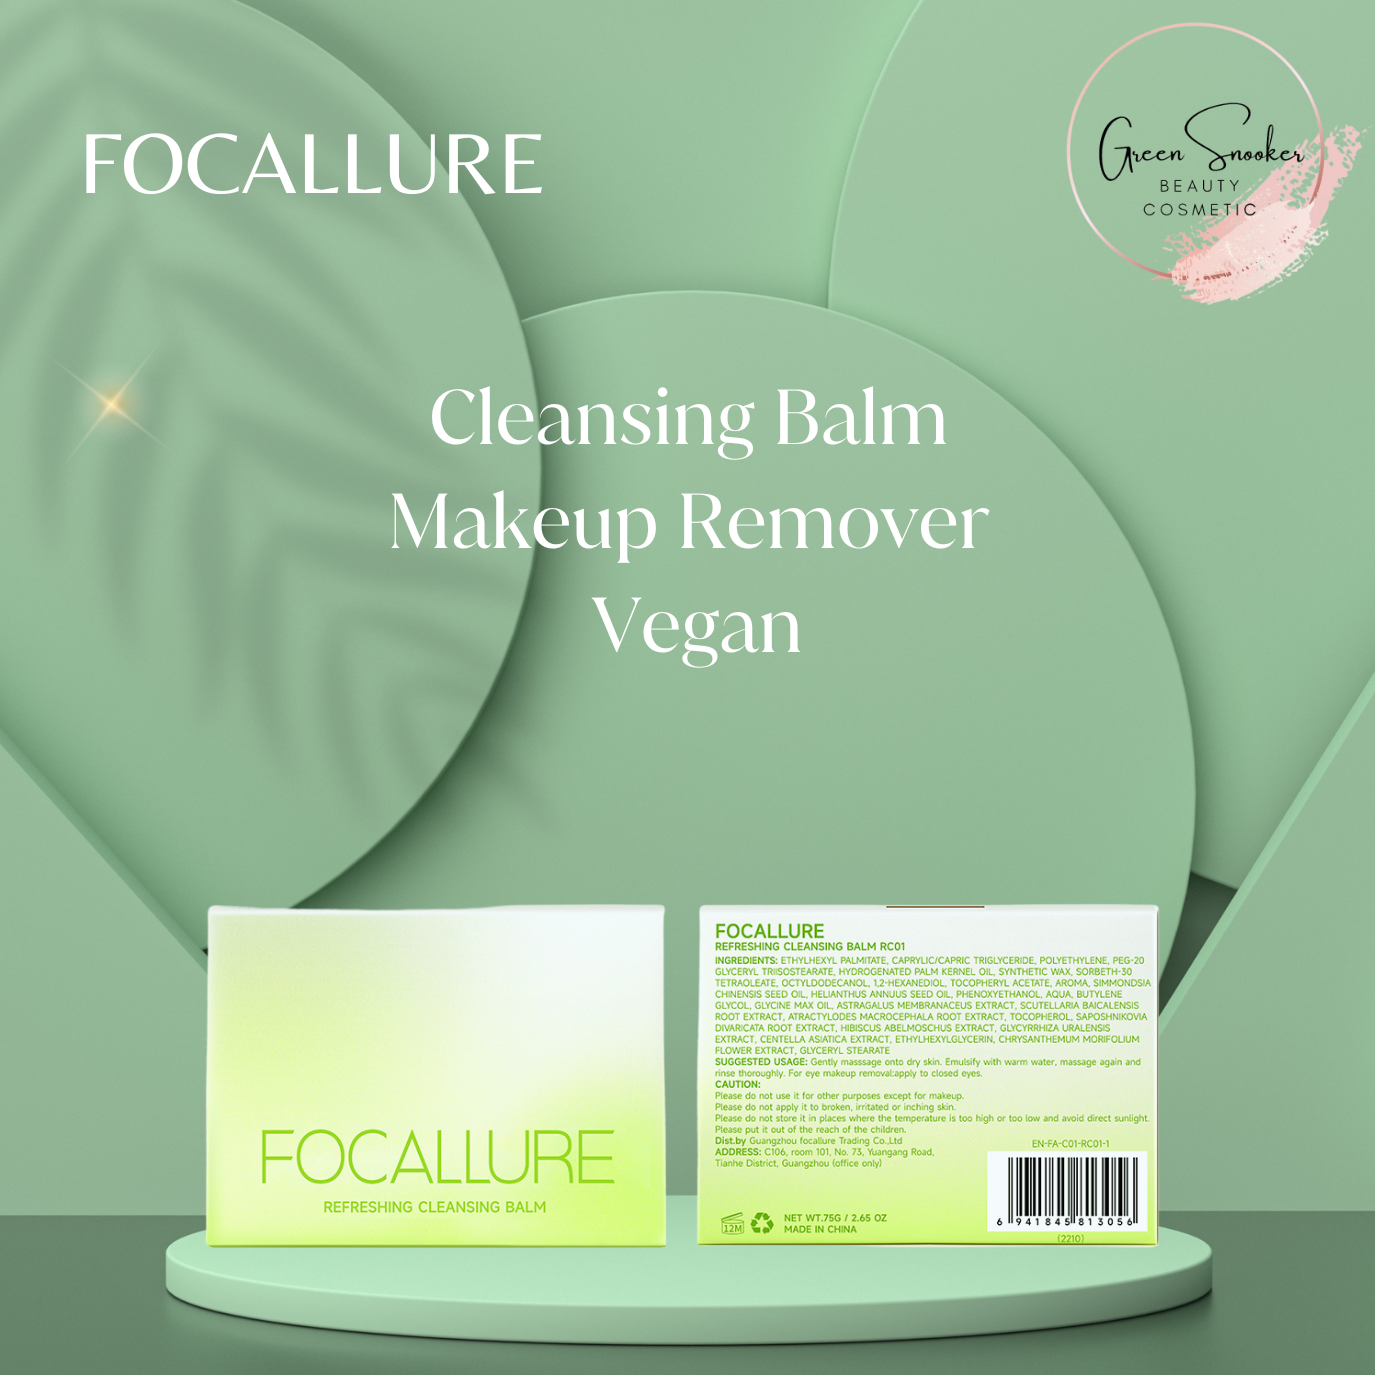 Focallure, Cleansing balm makeup remover, Vegan